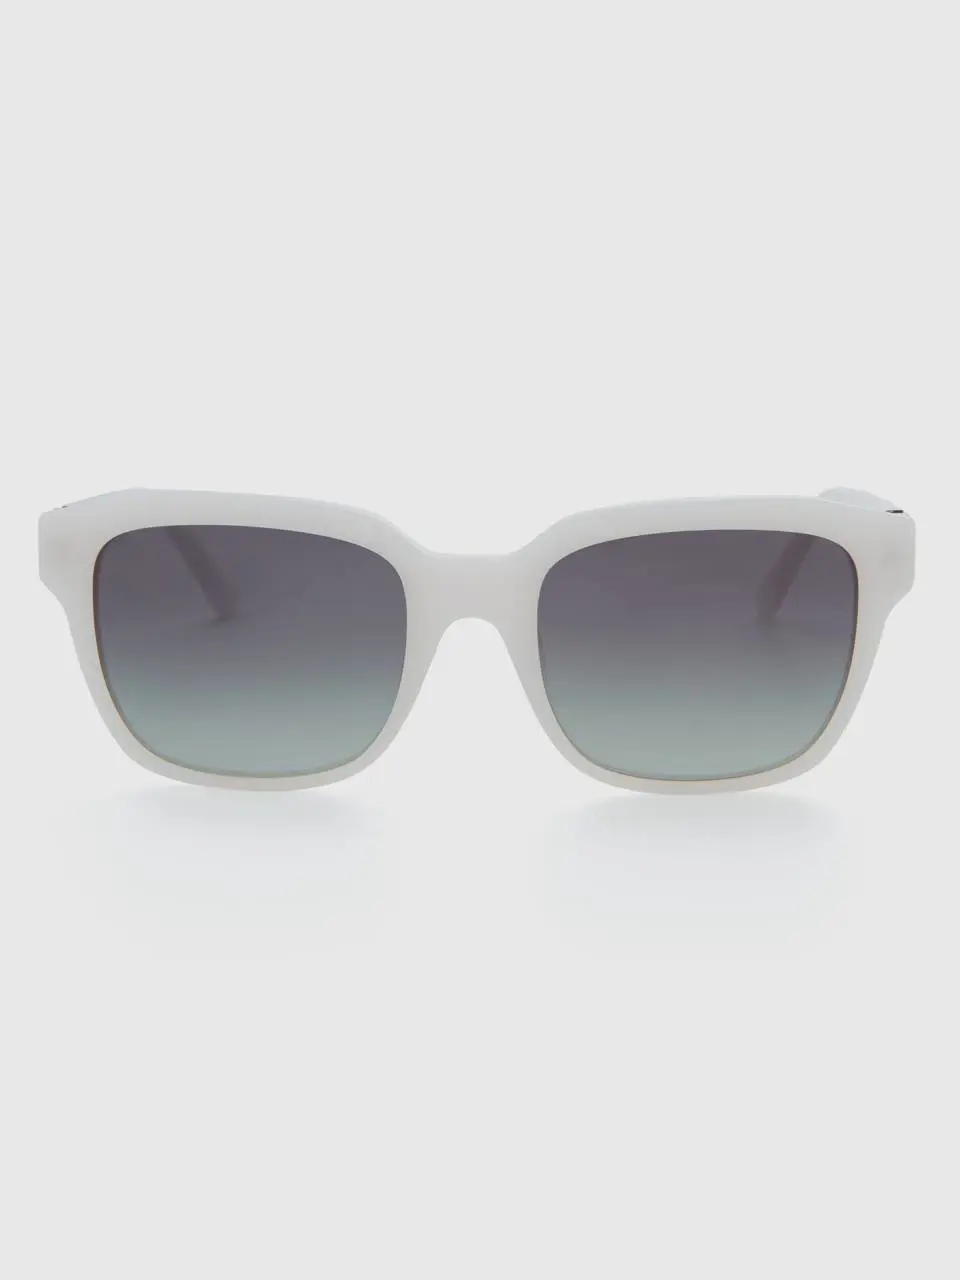 Benetton white sunglasses with logo. 1